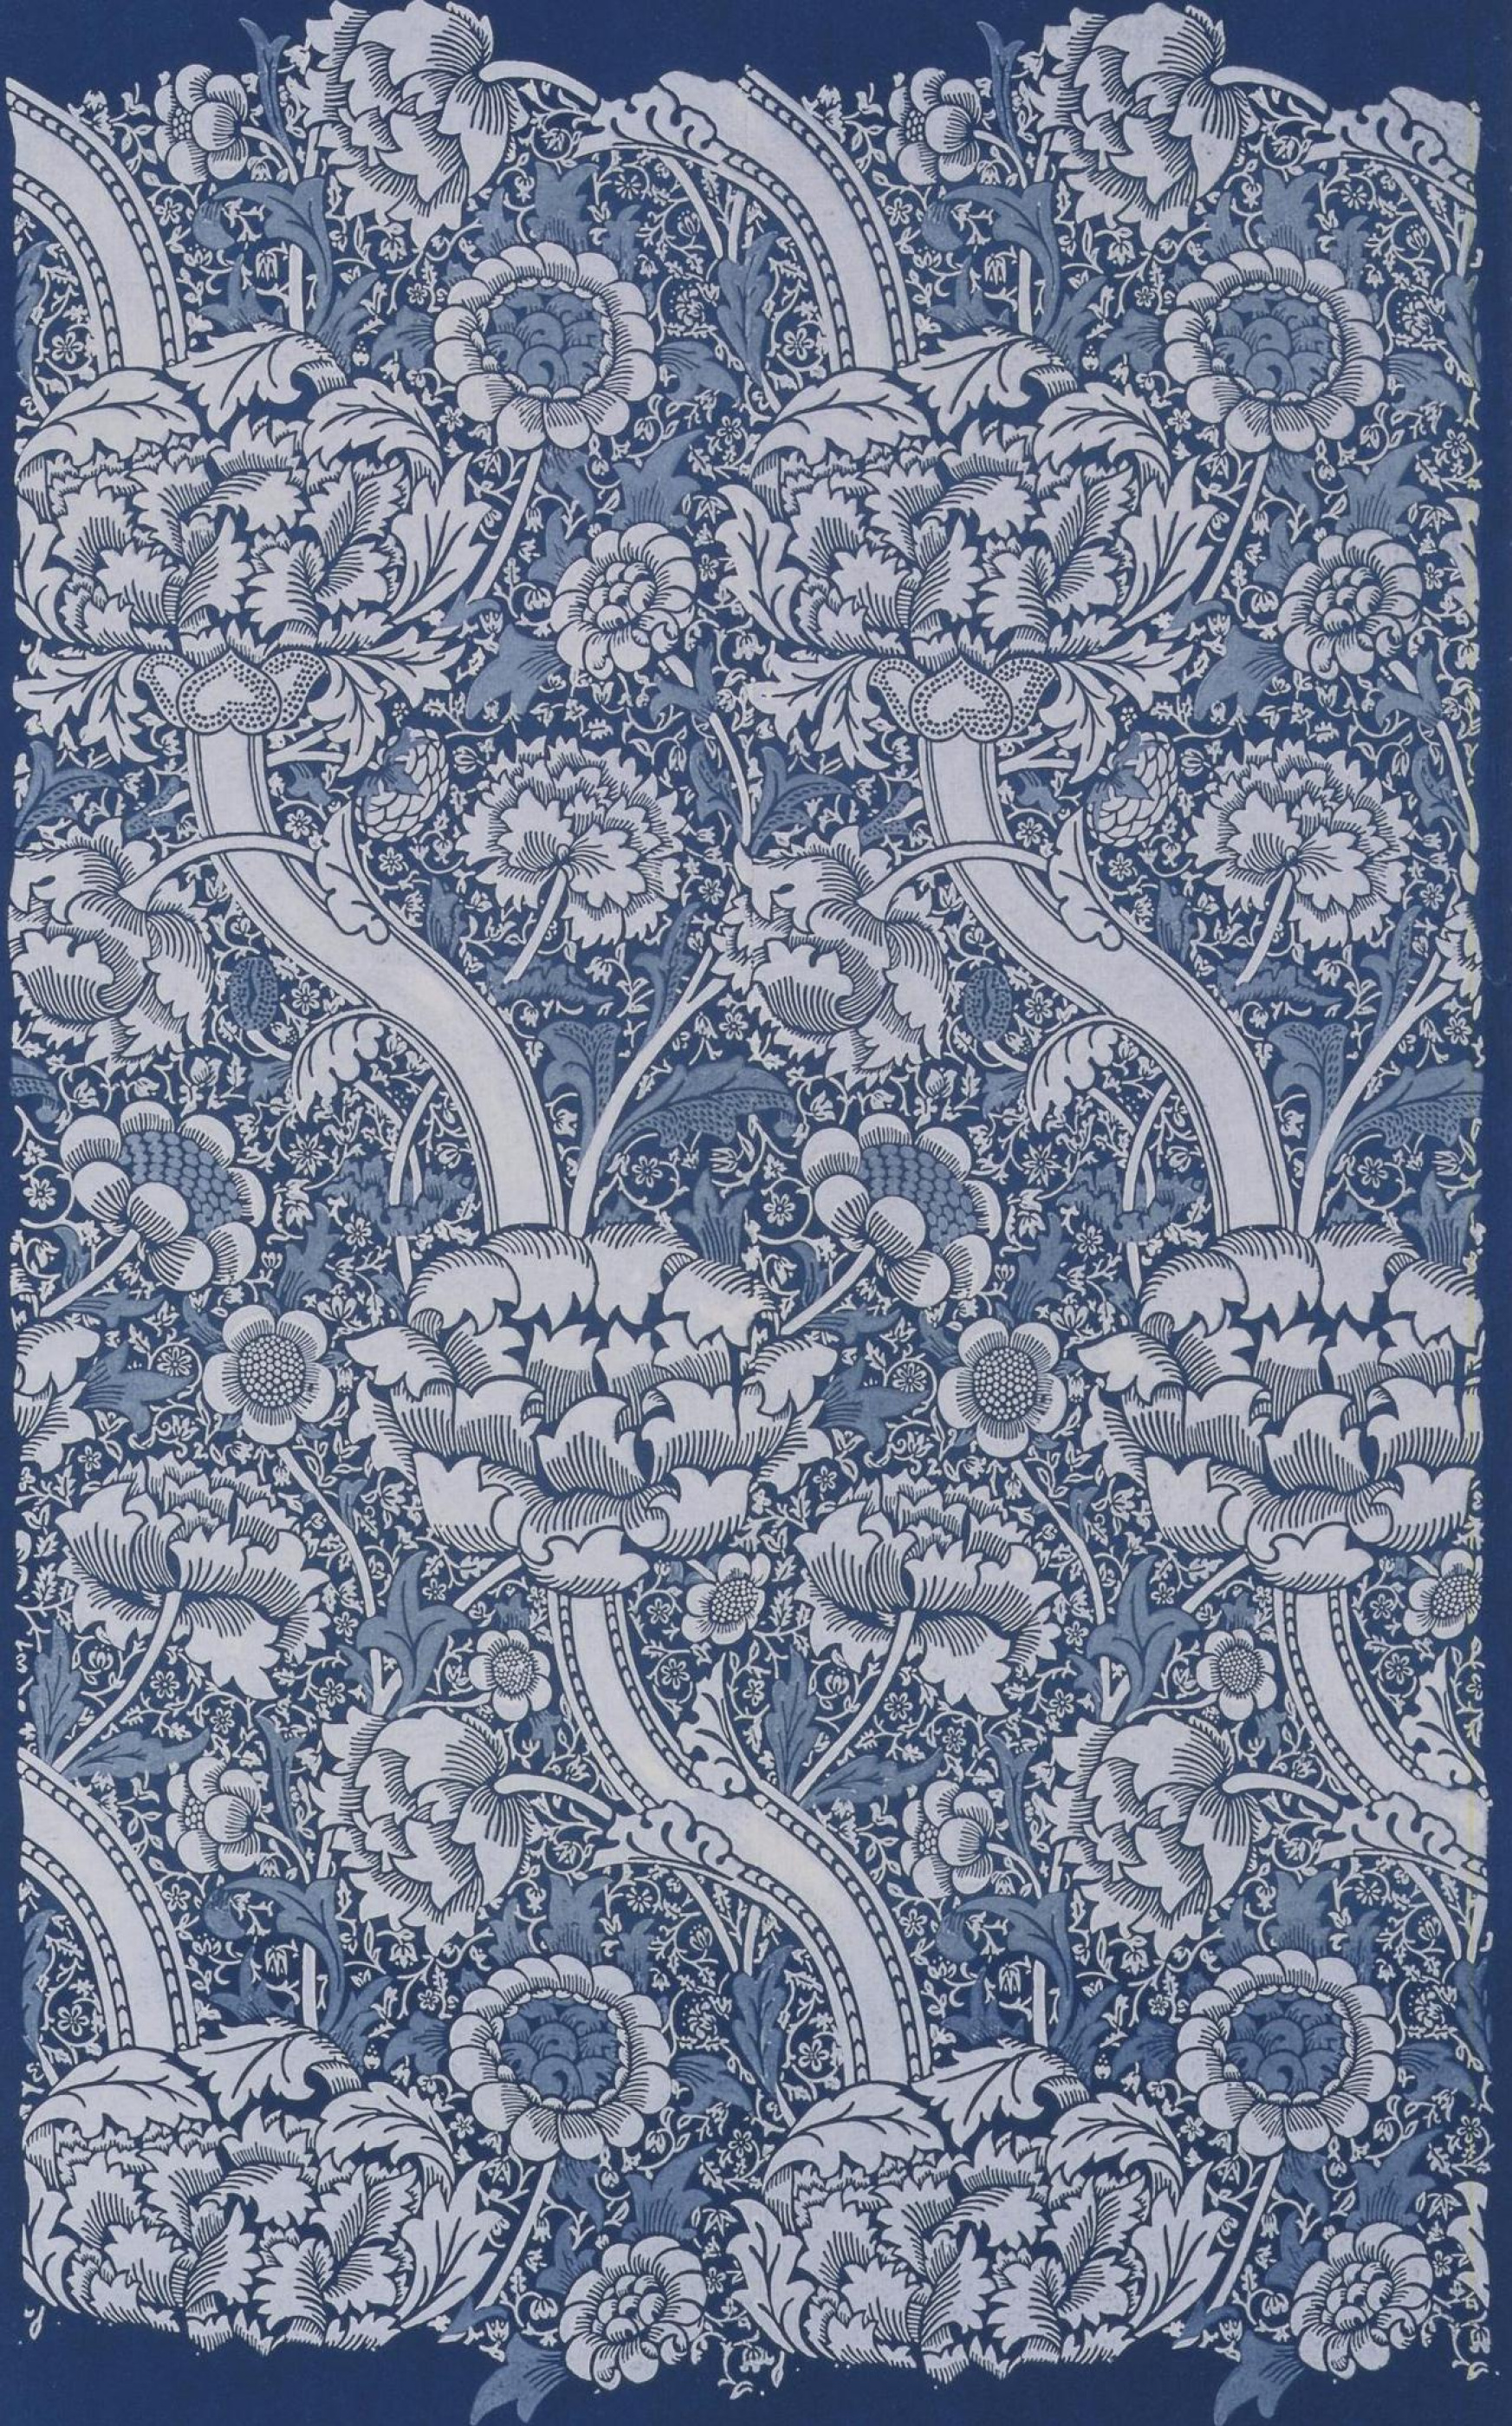 William Morris Described in 7 Facts and 7 Beautiful Designs